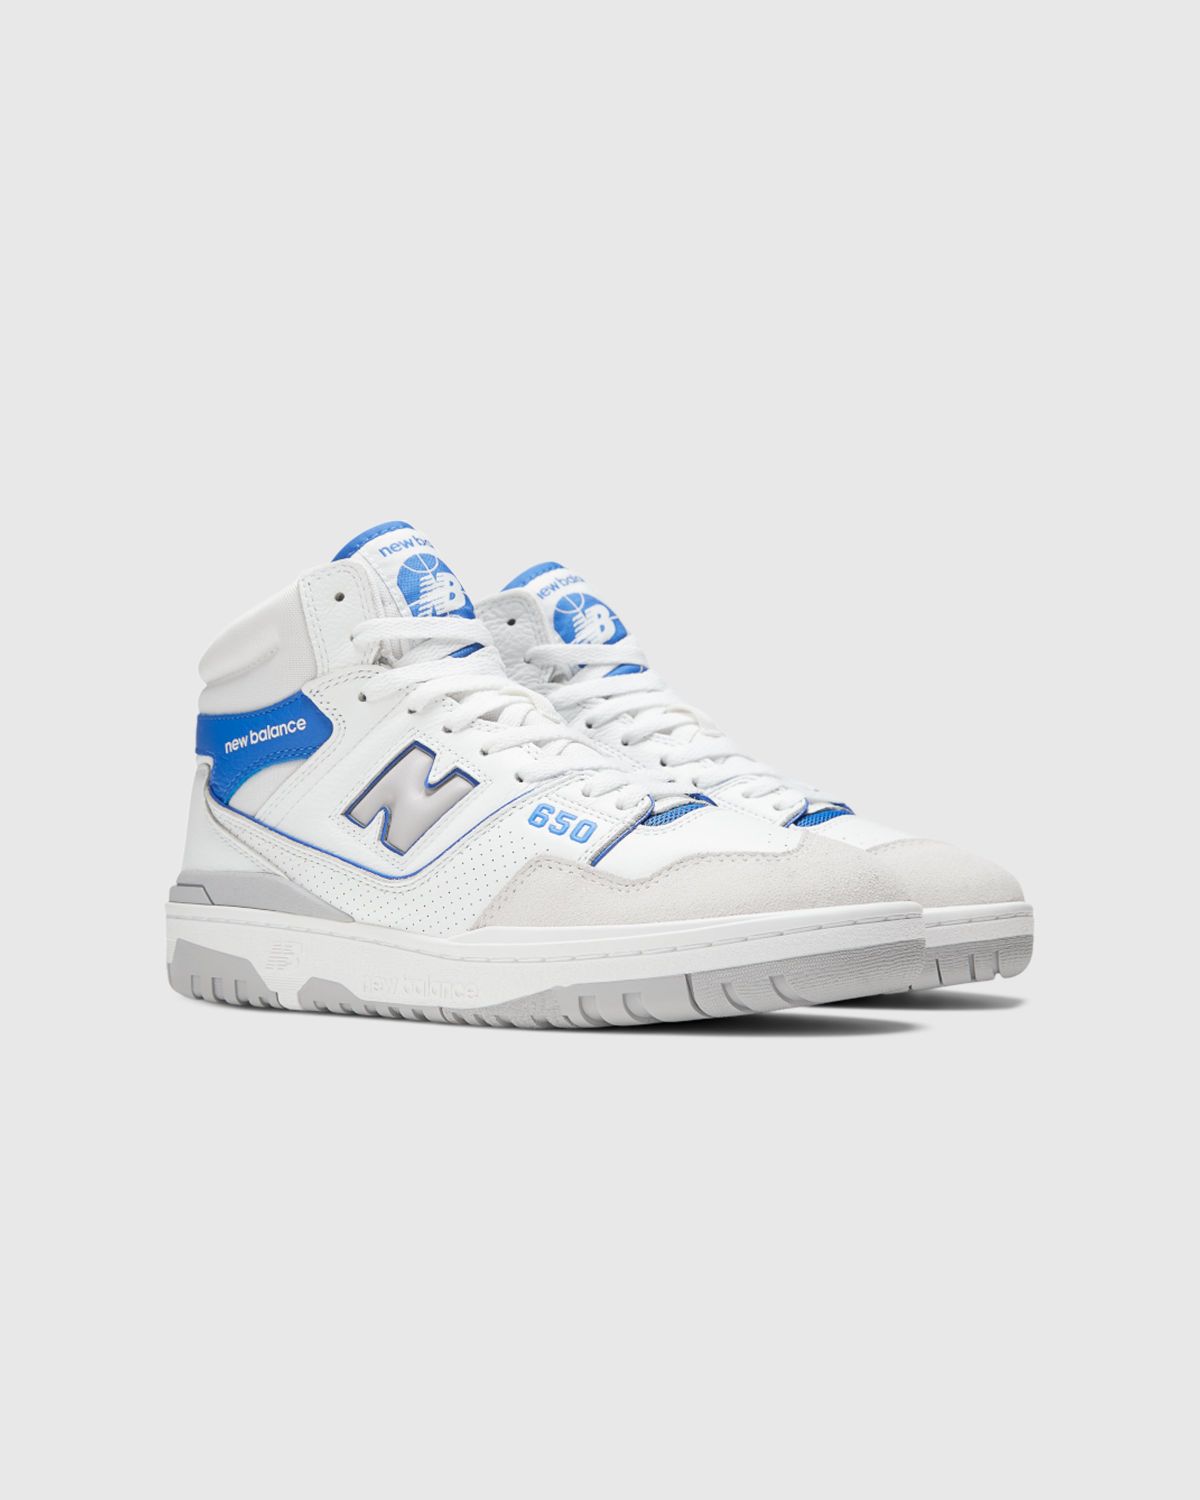 New Balance – BB 650 RWI White - Sneakers - White - Image 3